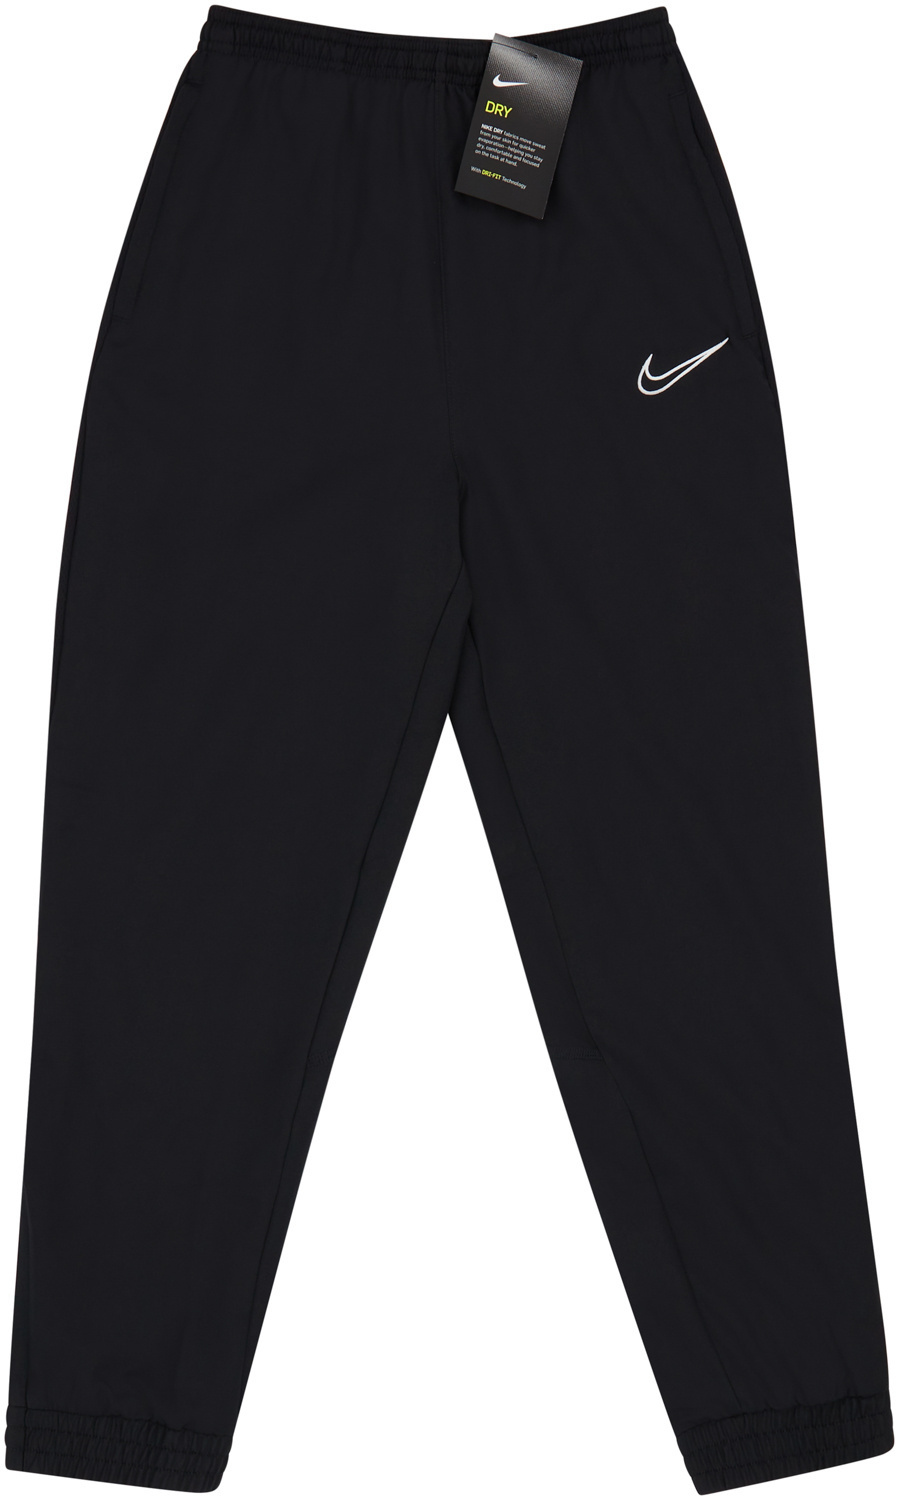 2020-21 Nike Academy Training Pants/Bottoms - NEW - (KIDS)